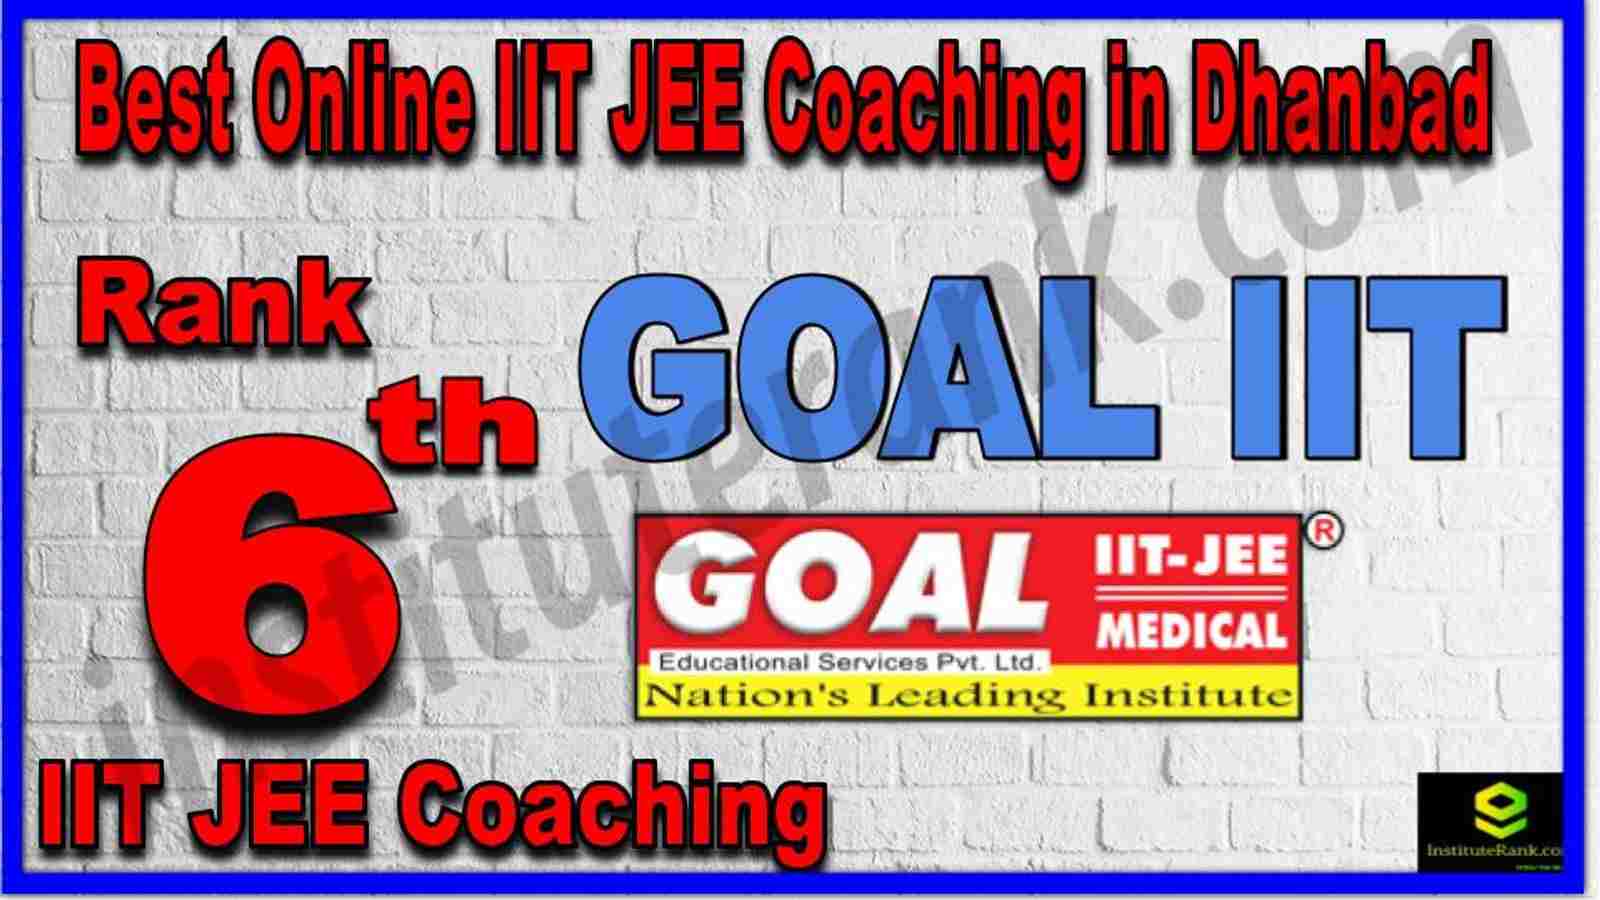 Rank 6th Best Online IIT JEE Coaching in Dhanbad